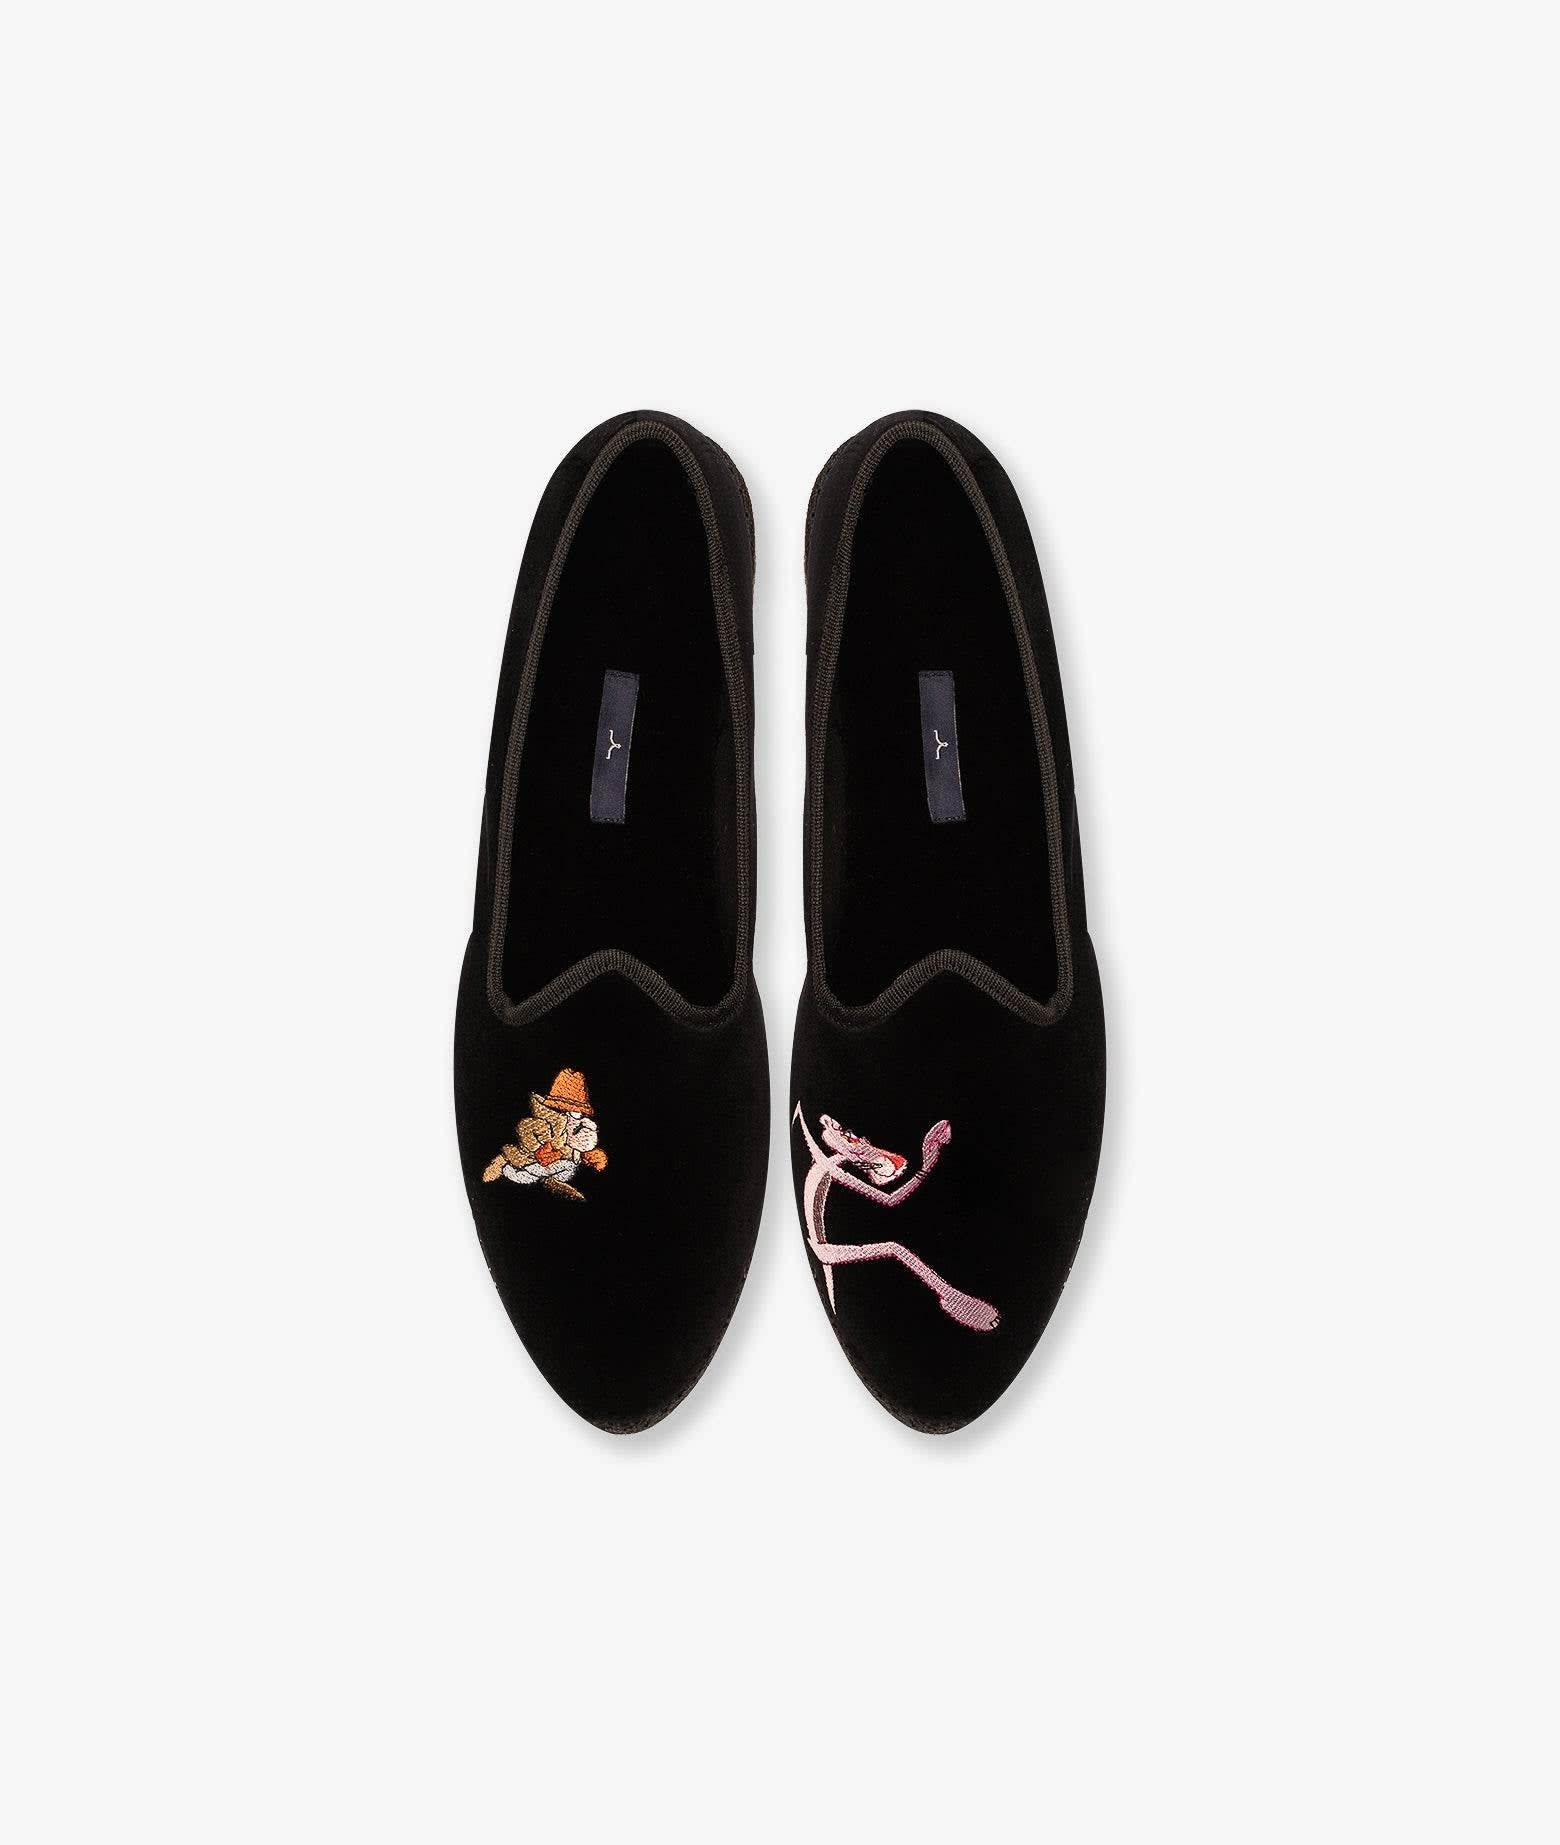 Larusmiani Friulana pink Panther Shoes